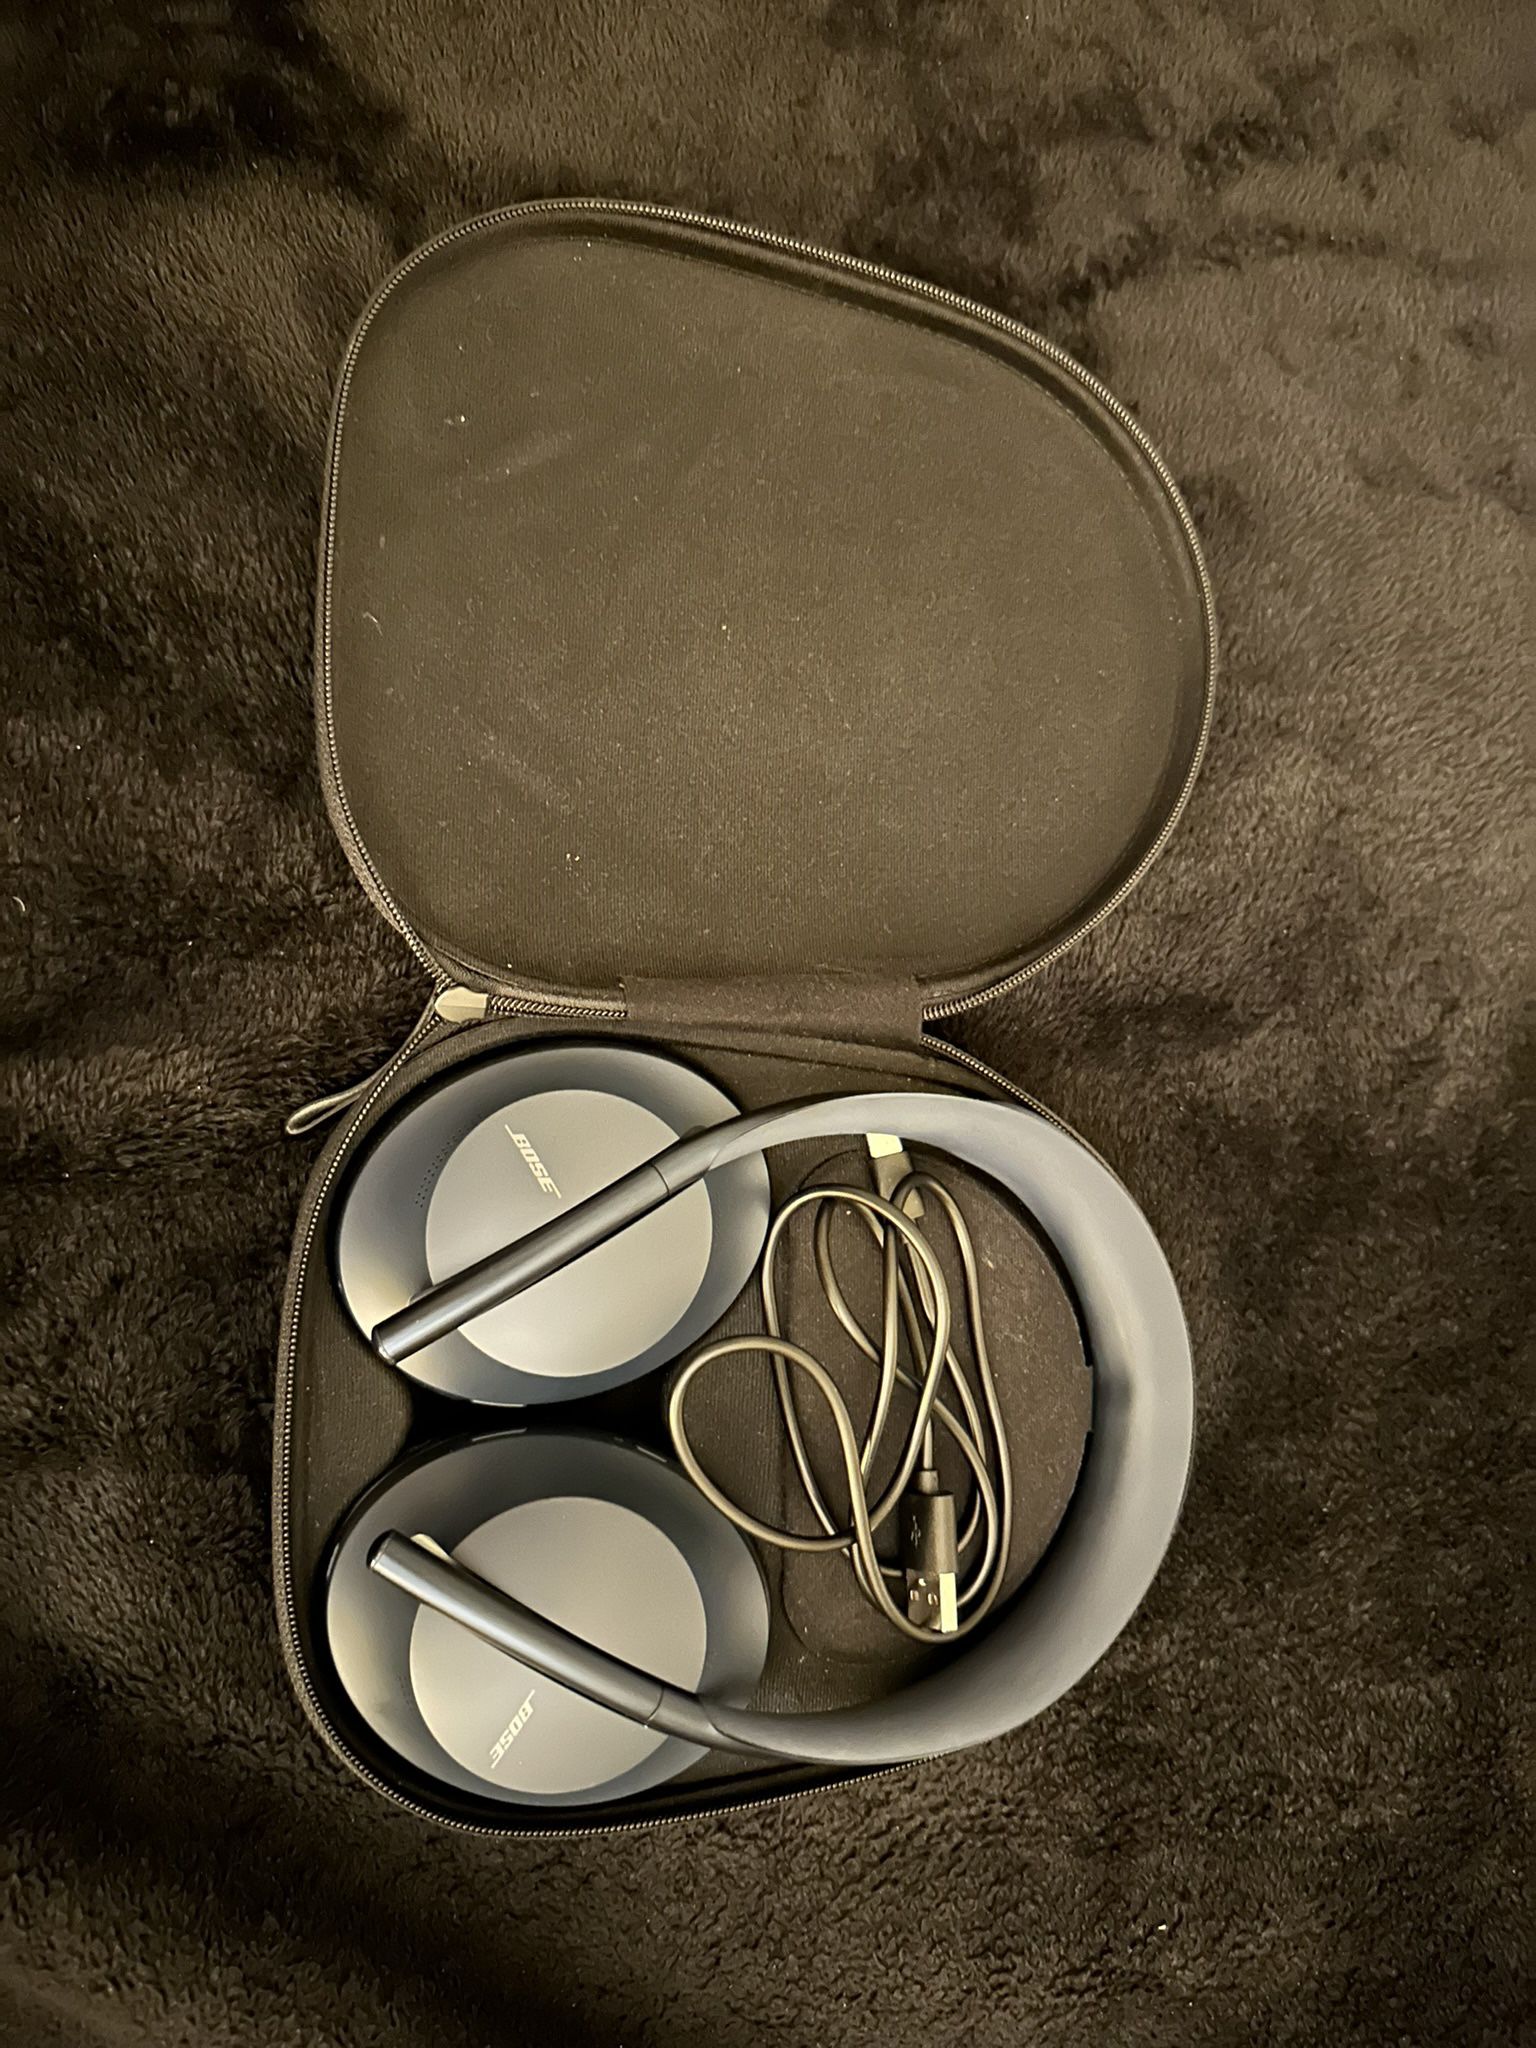 Bose 700 Headphones 